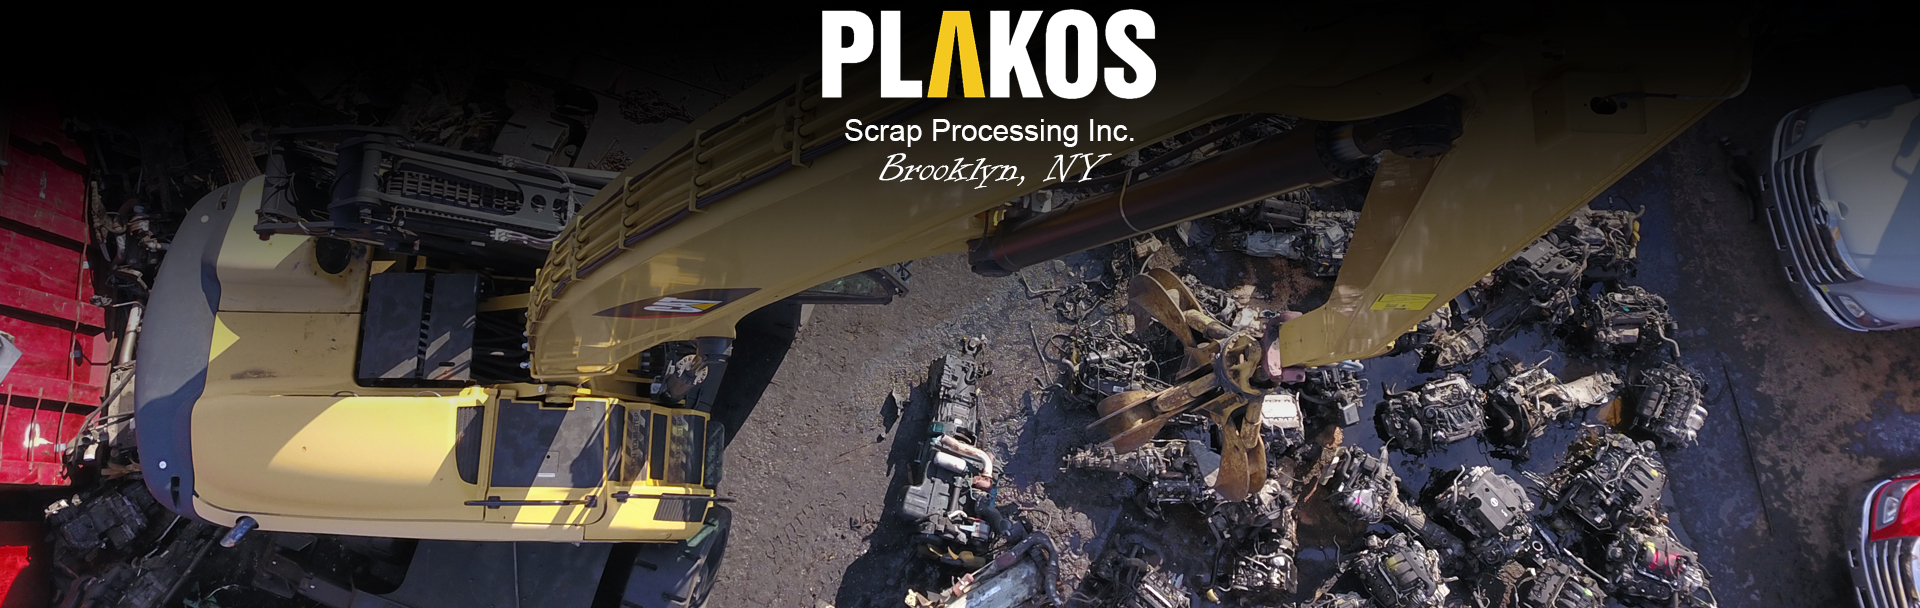 Plakos Scrap Processing Inc. image